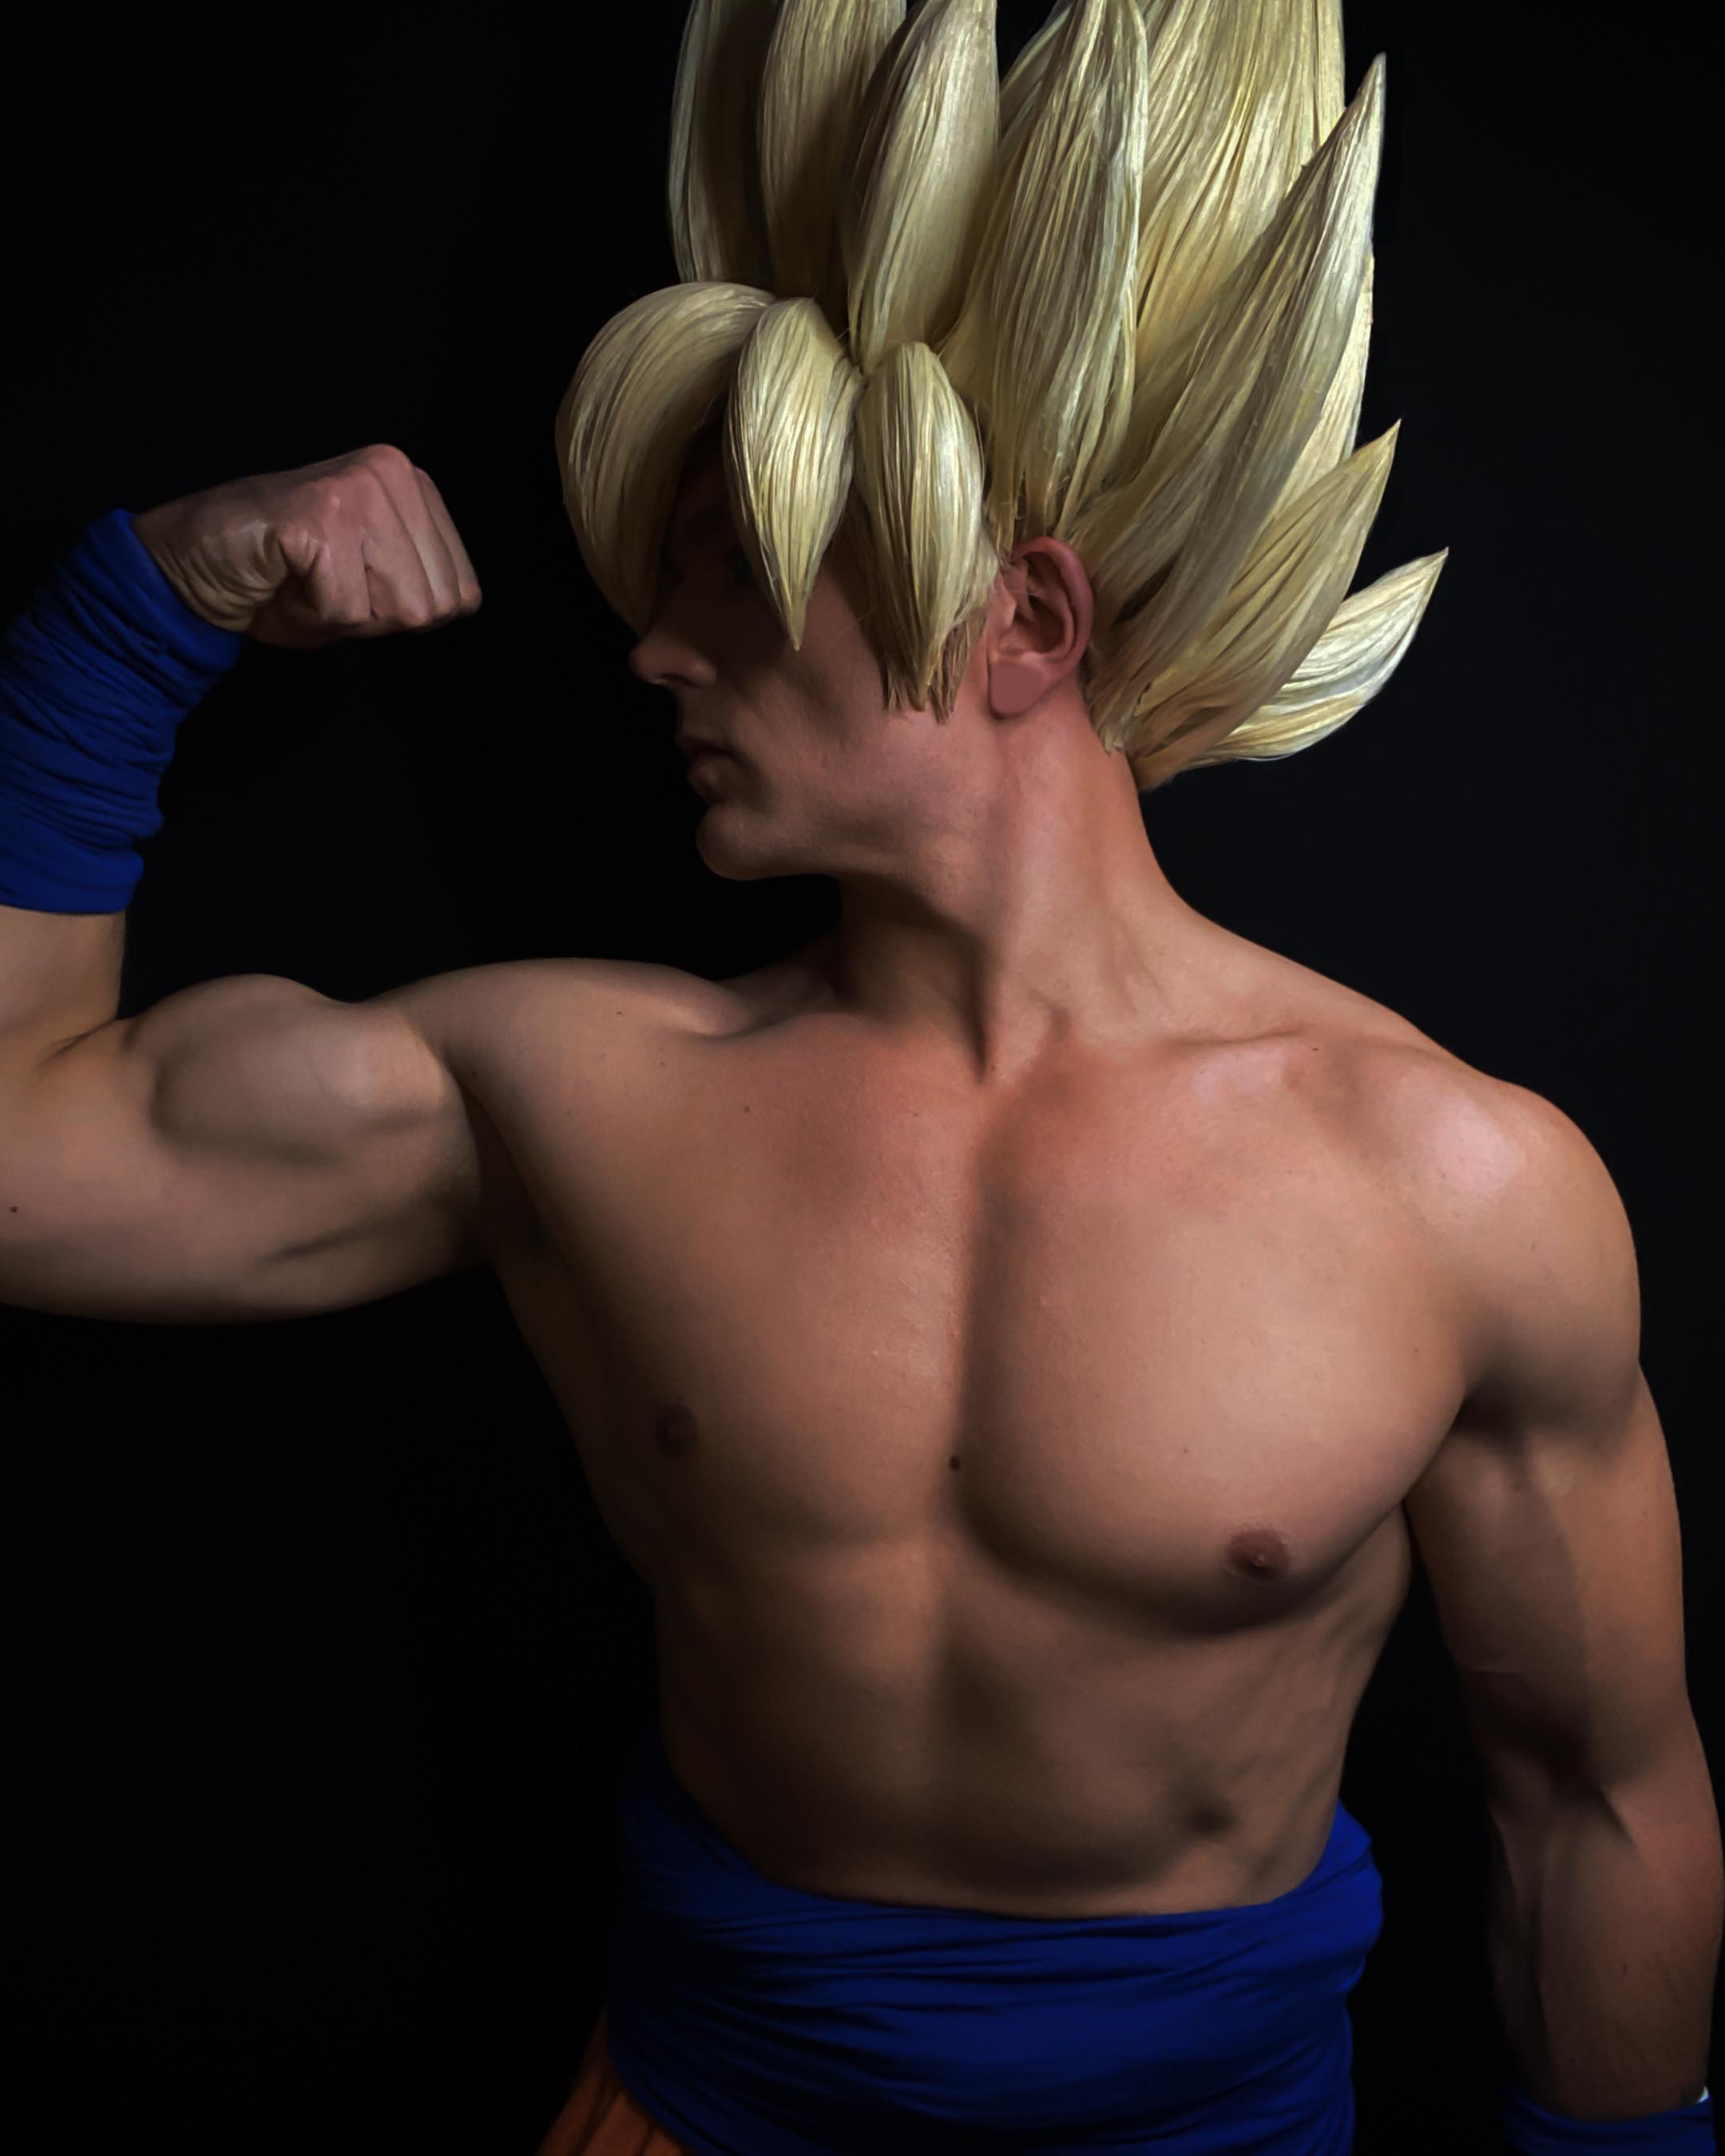 Super Saiyan Goku cosplay flexing, online anime fitness coaching based on dragonball z